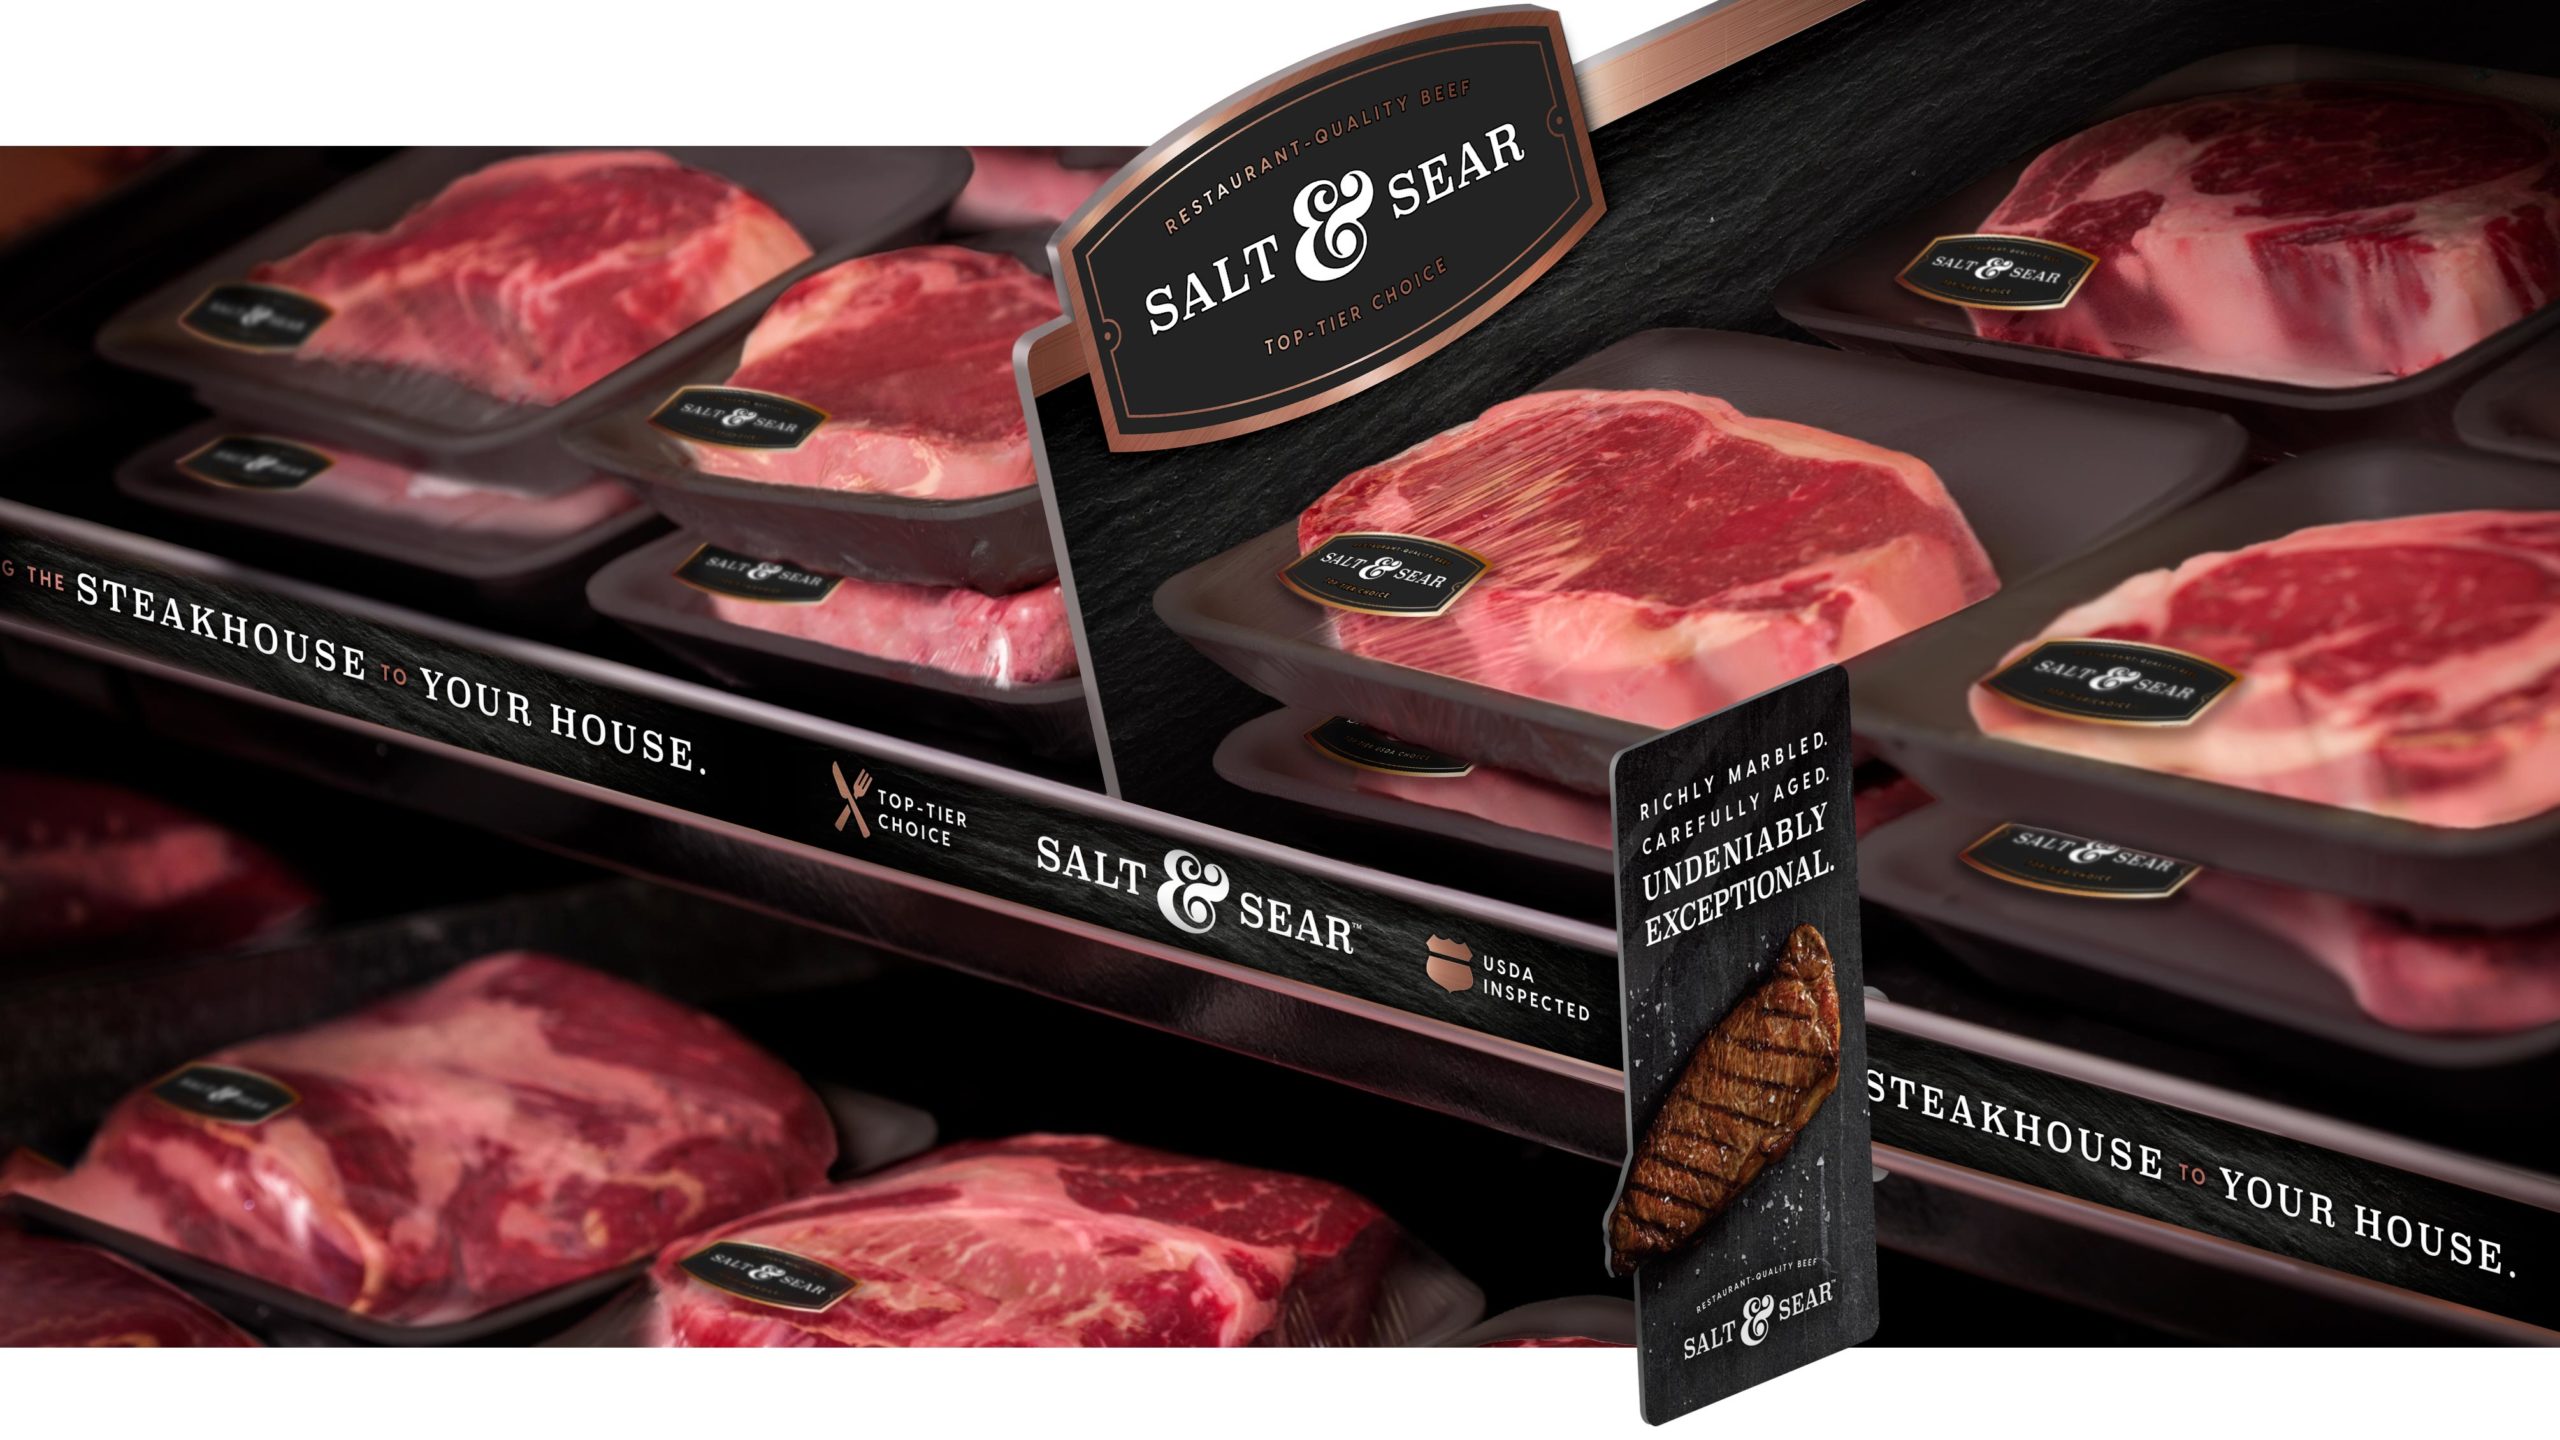 Salt & Sear branding at the meat case.